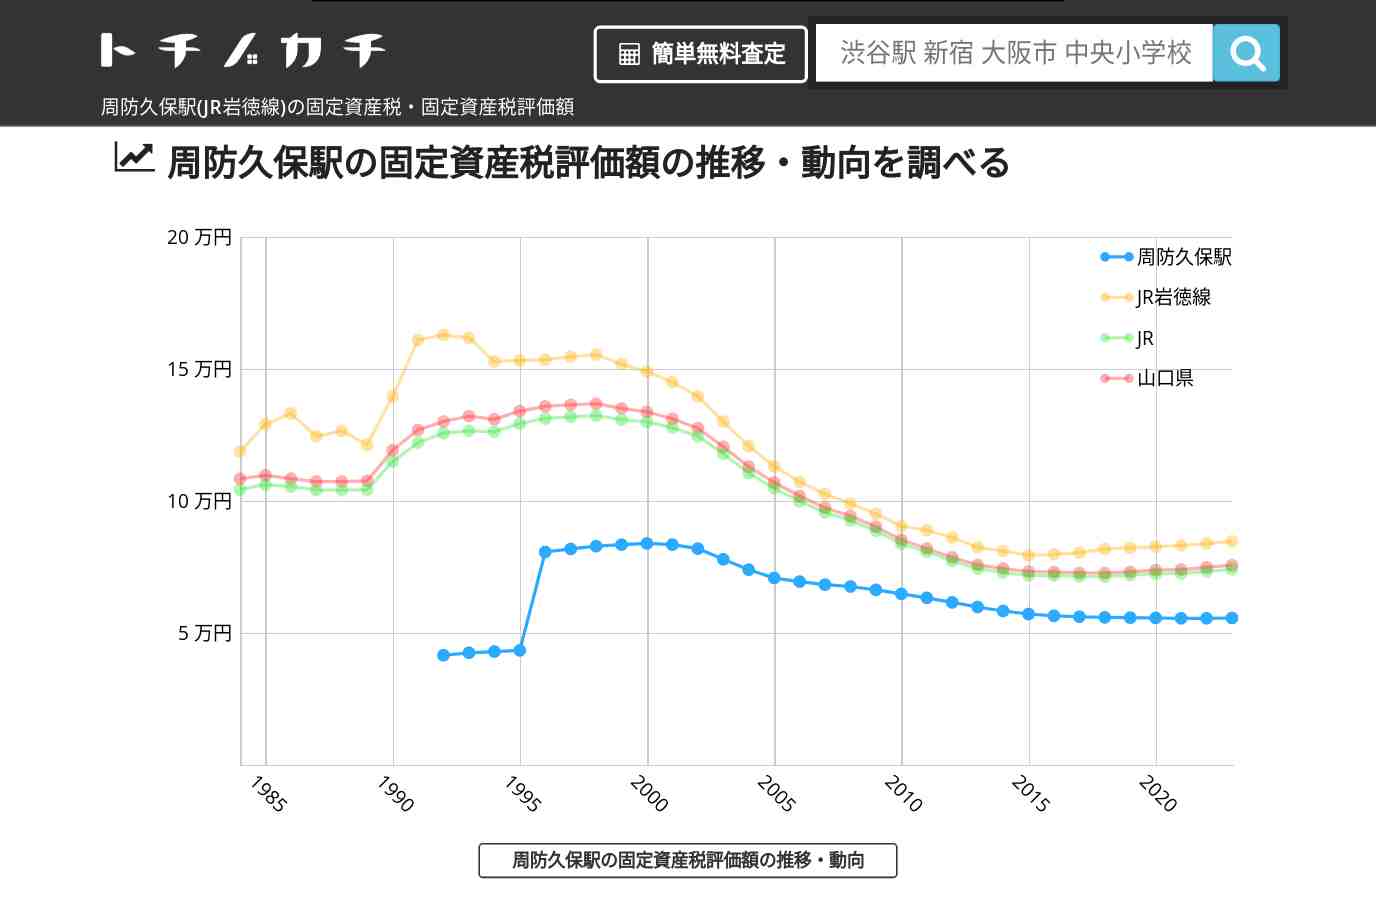 周防久保駅(JR岩徳線)の固定資産税・固定資産税評価額 | トチノカチ